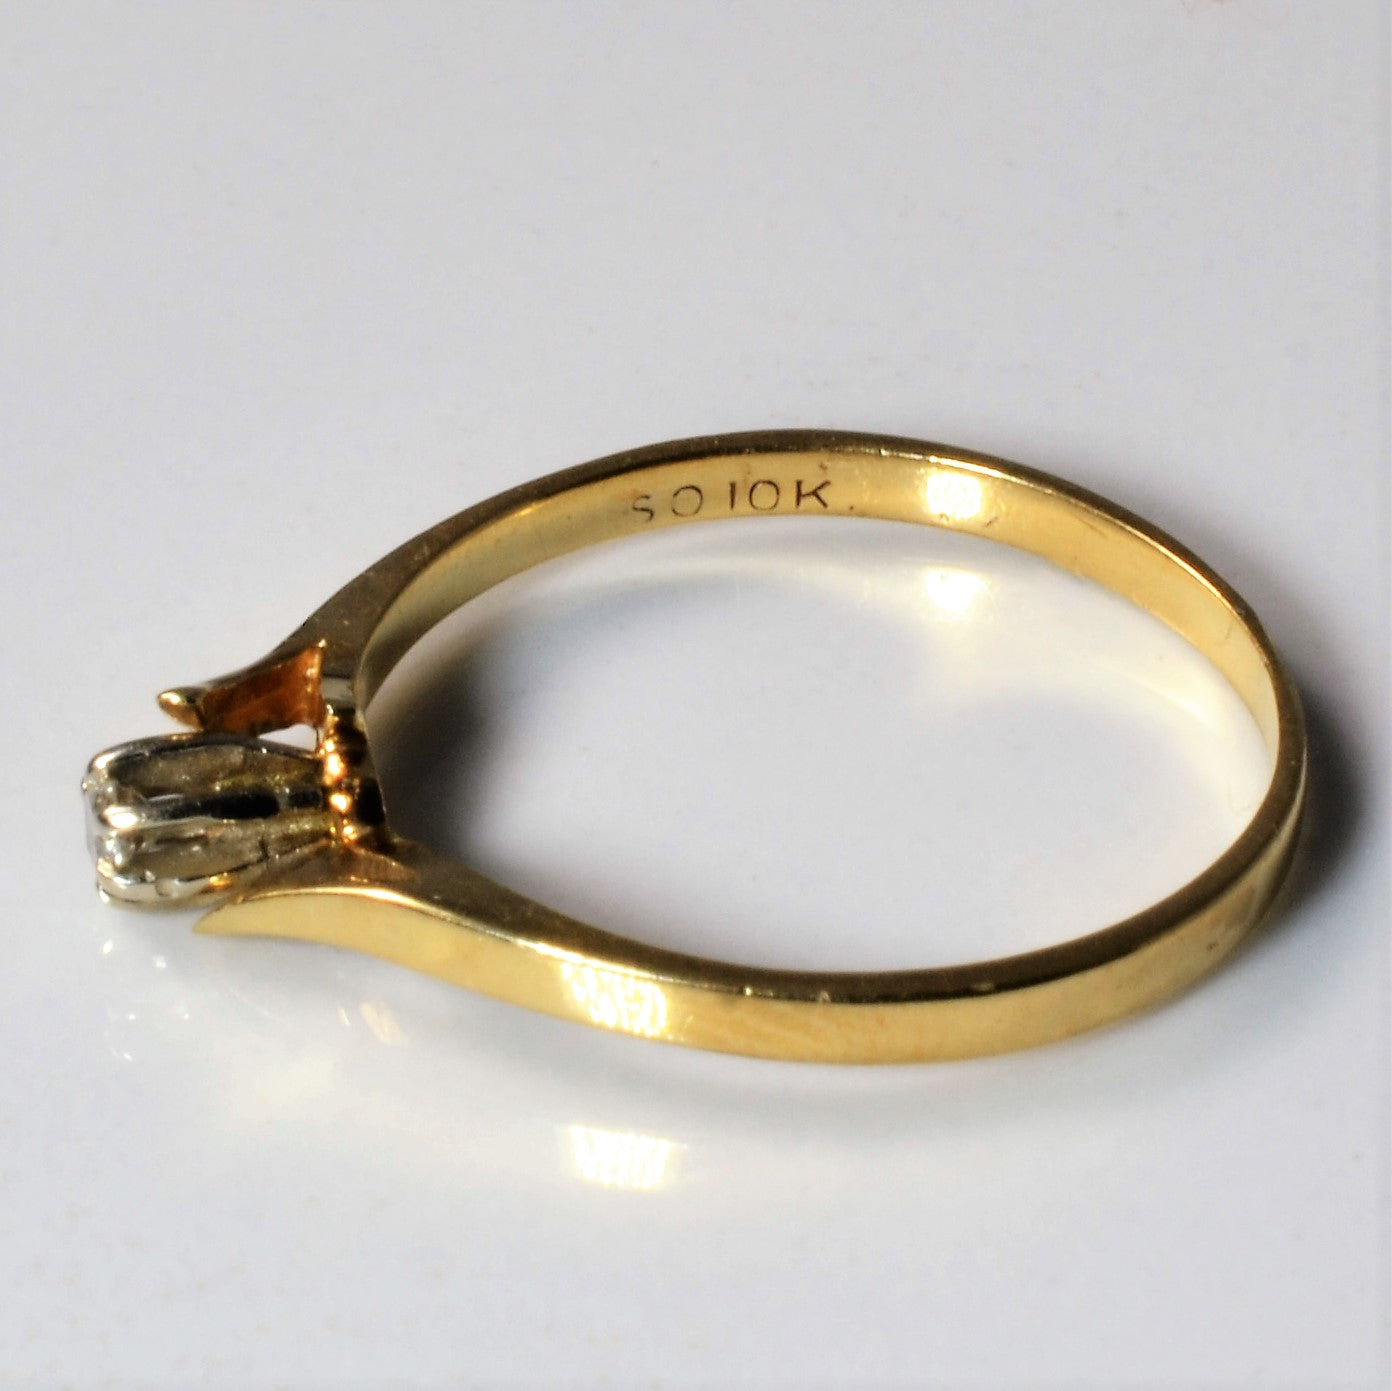 Petite Bypass Diamond Promise Ring | 0.04ct | SZ 6.5 |